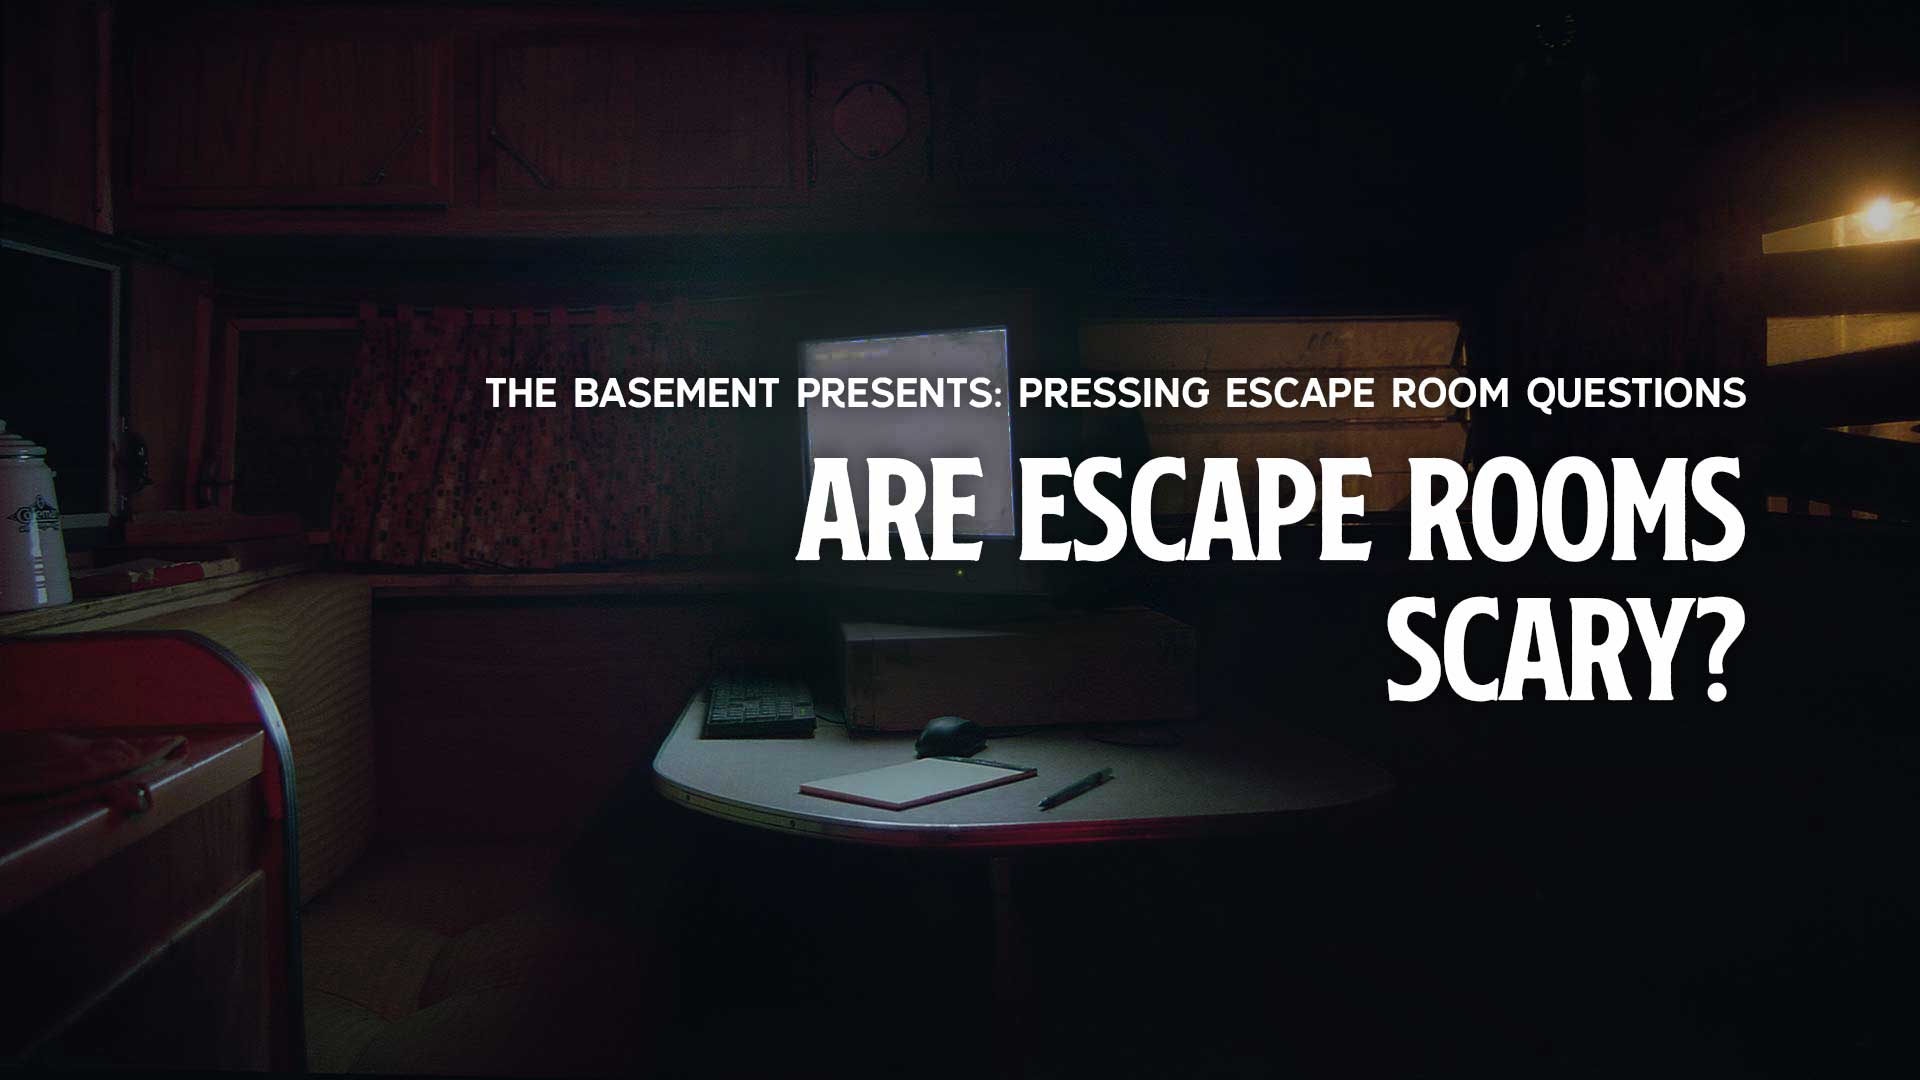 Are escape rooms scary?